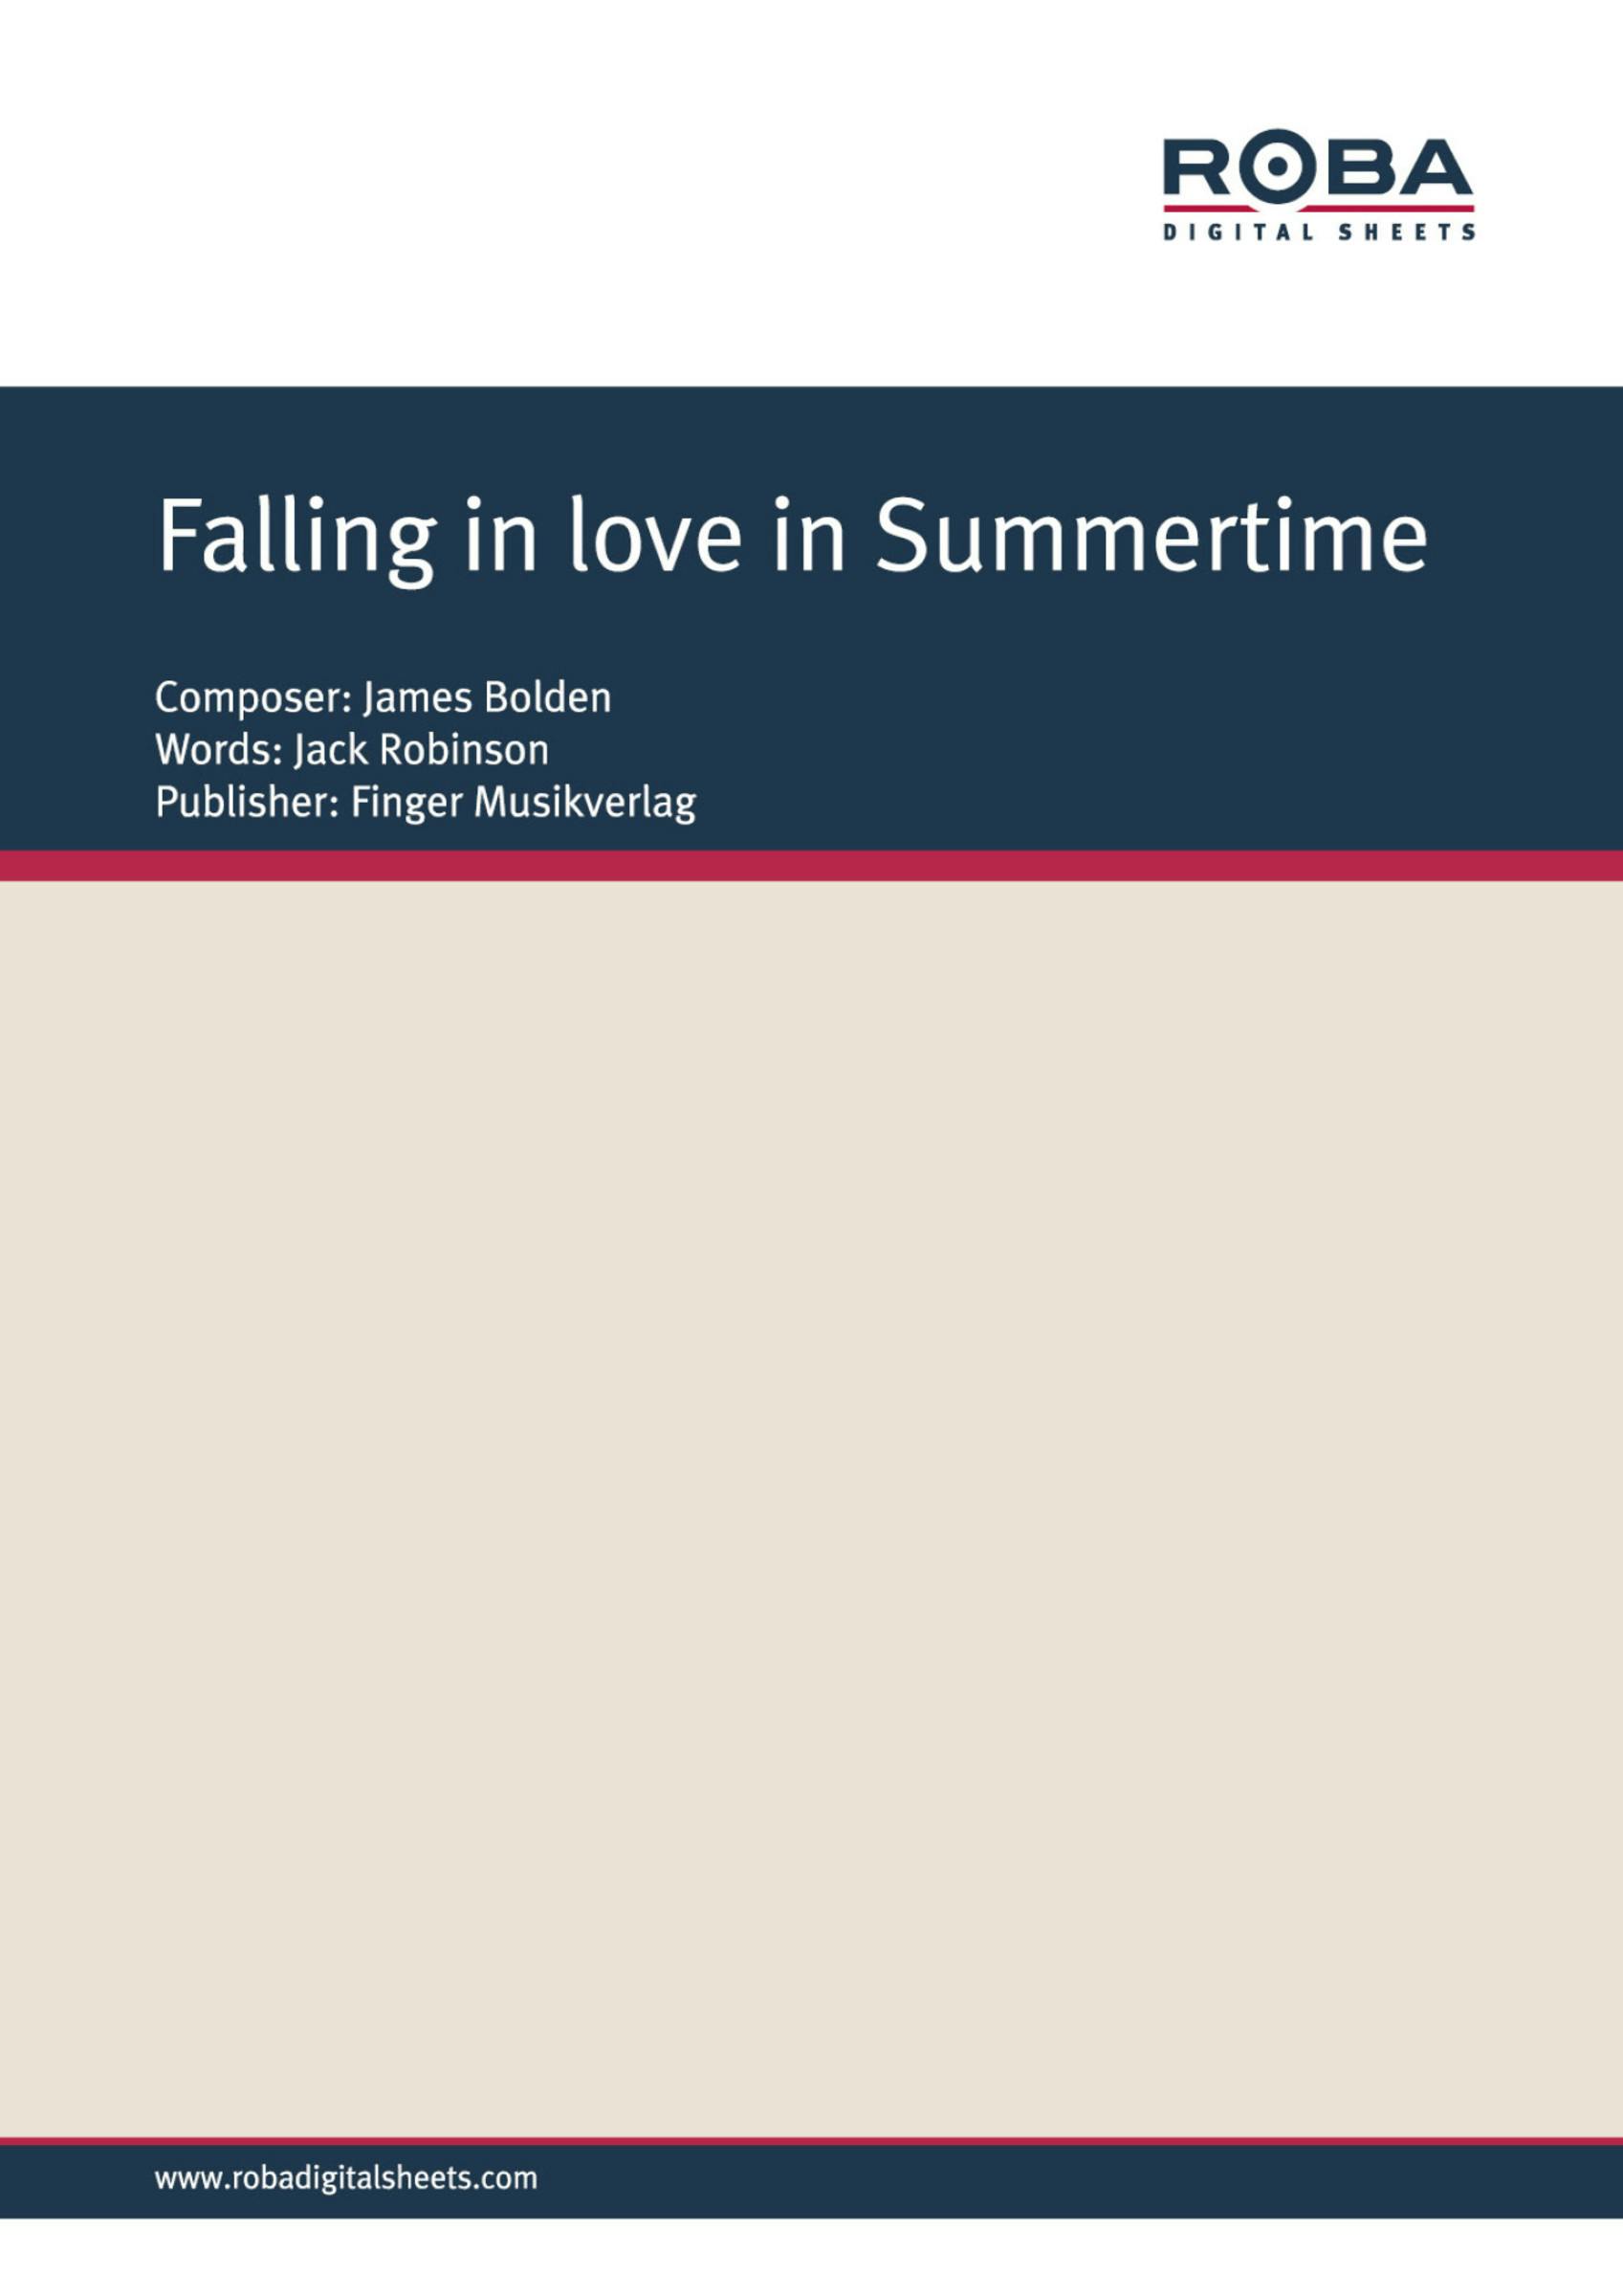 Falling in love in Summertime - undefined